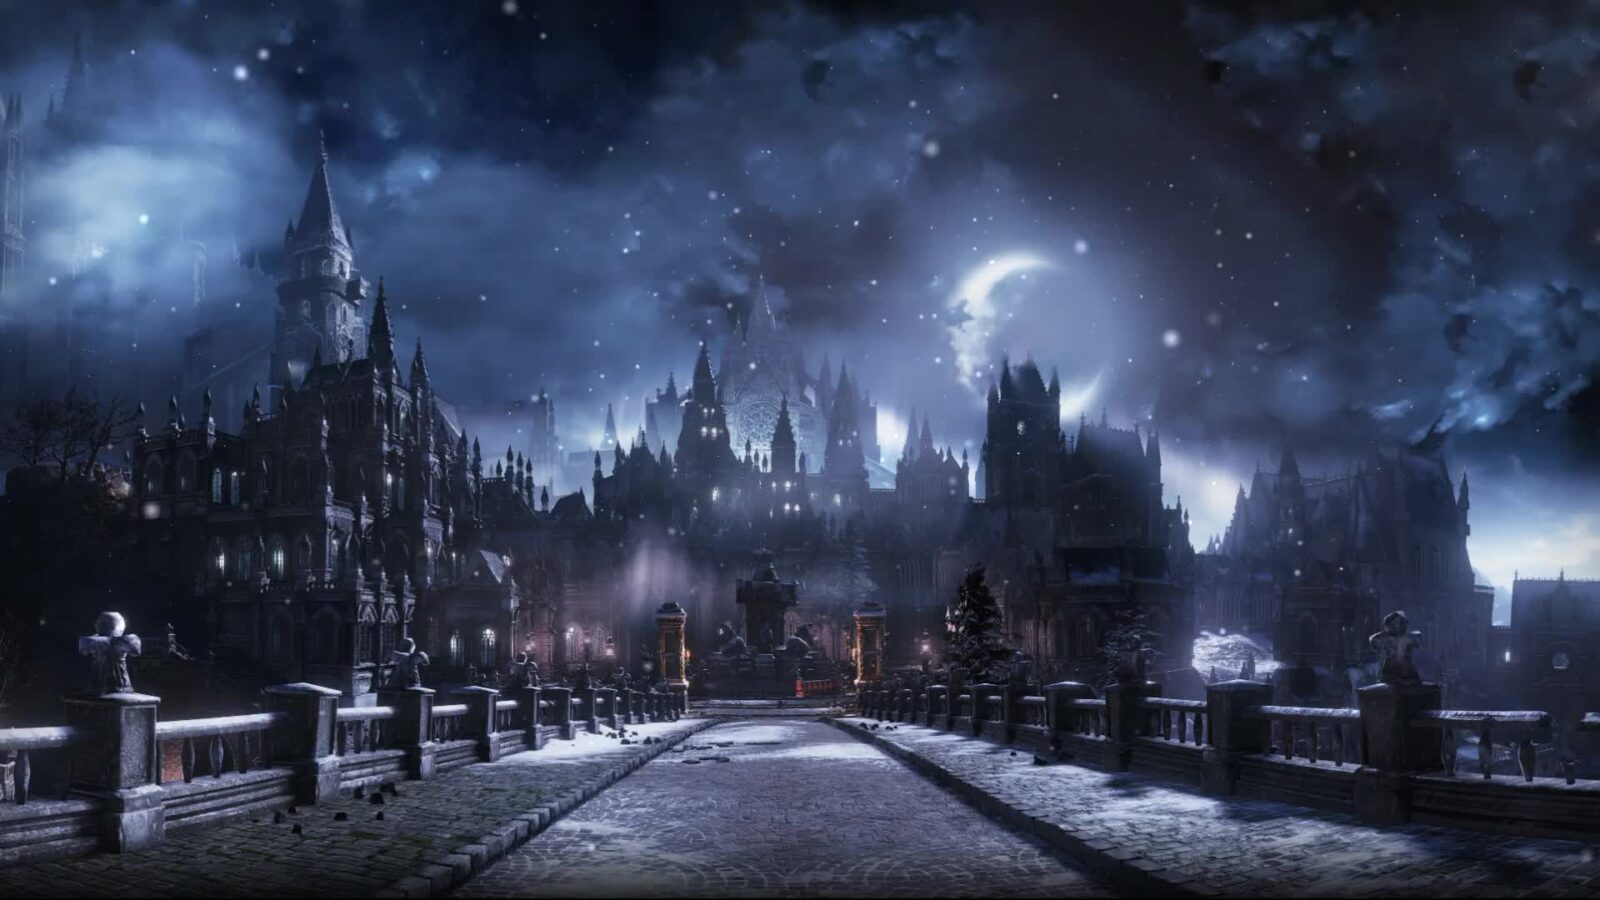 Dark Souls 3 Night Snow - Animated Desktop Wallpaper - Live Desktop